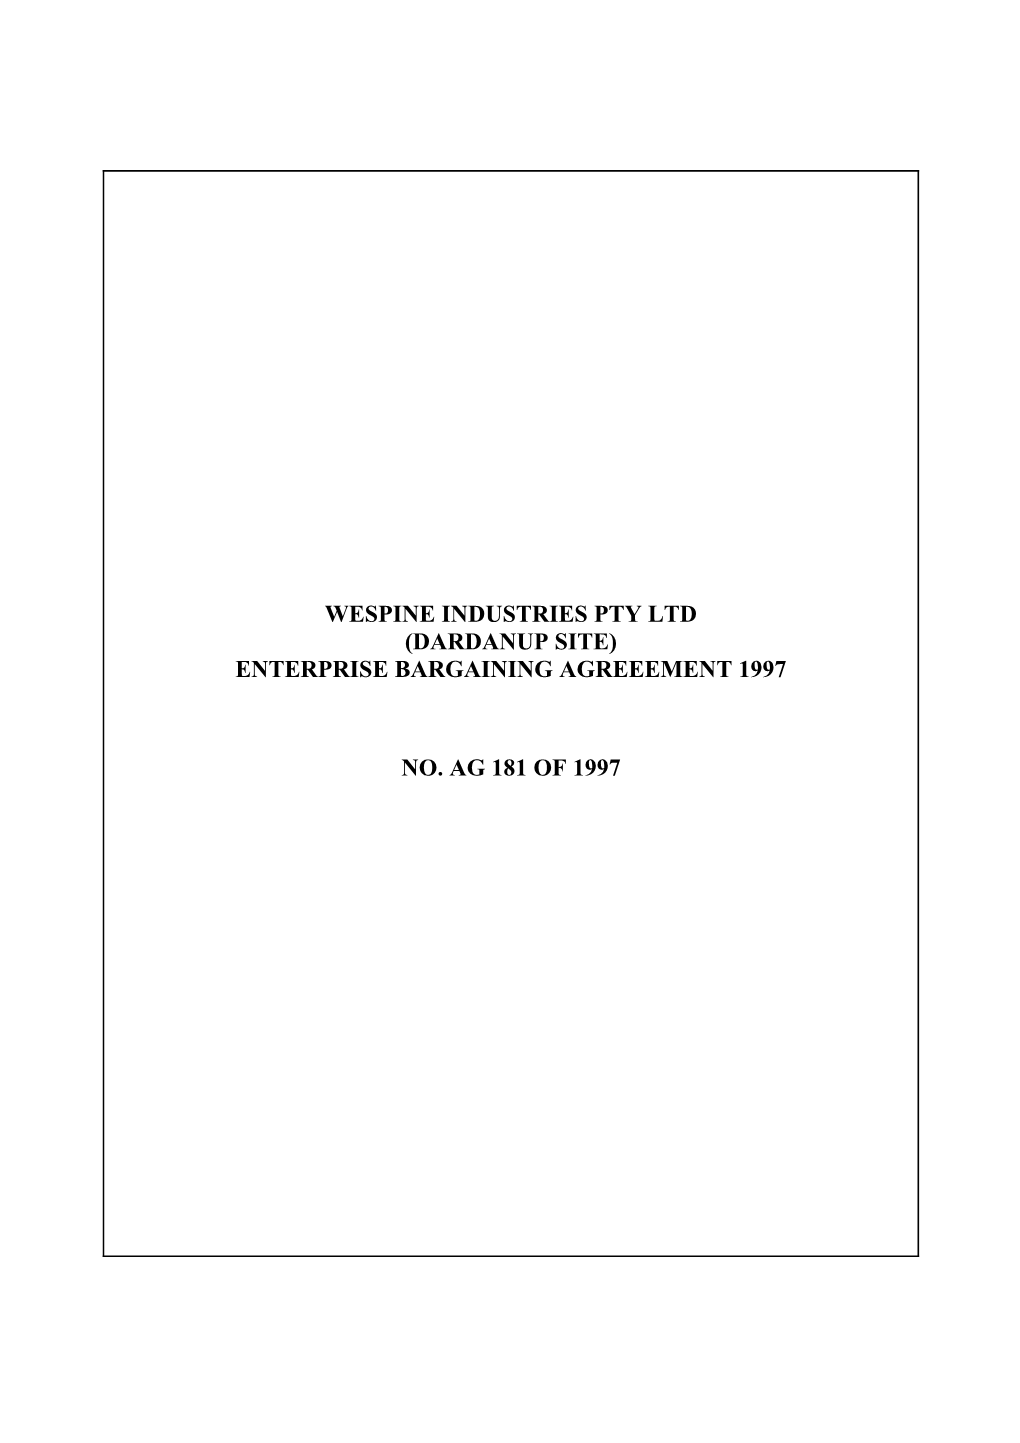 Wespine Industries Pty Ltd (Dardanup Site) Enterprise Bargaining Agreement 1997, The